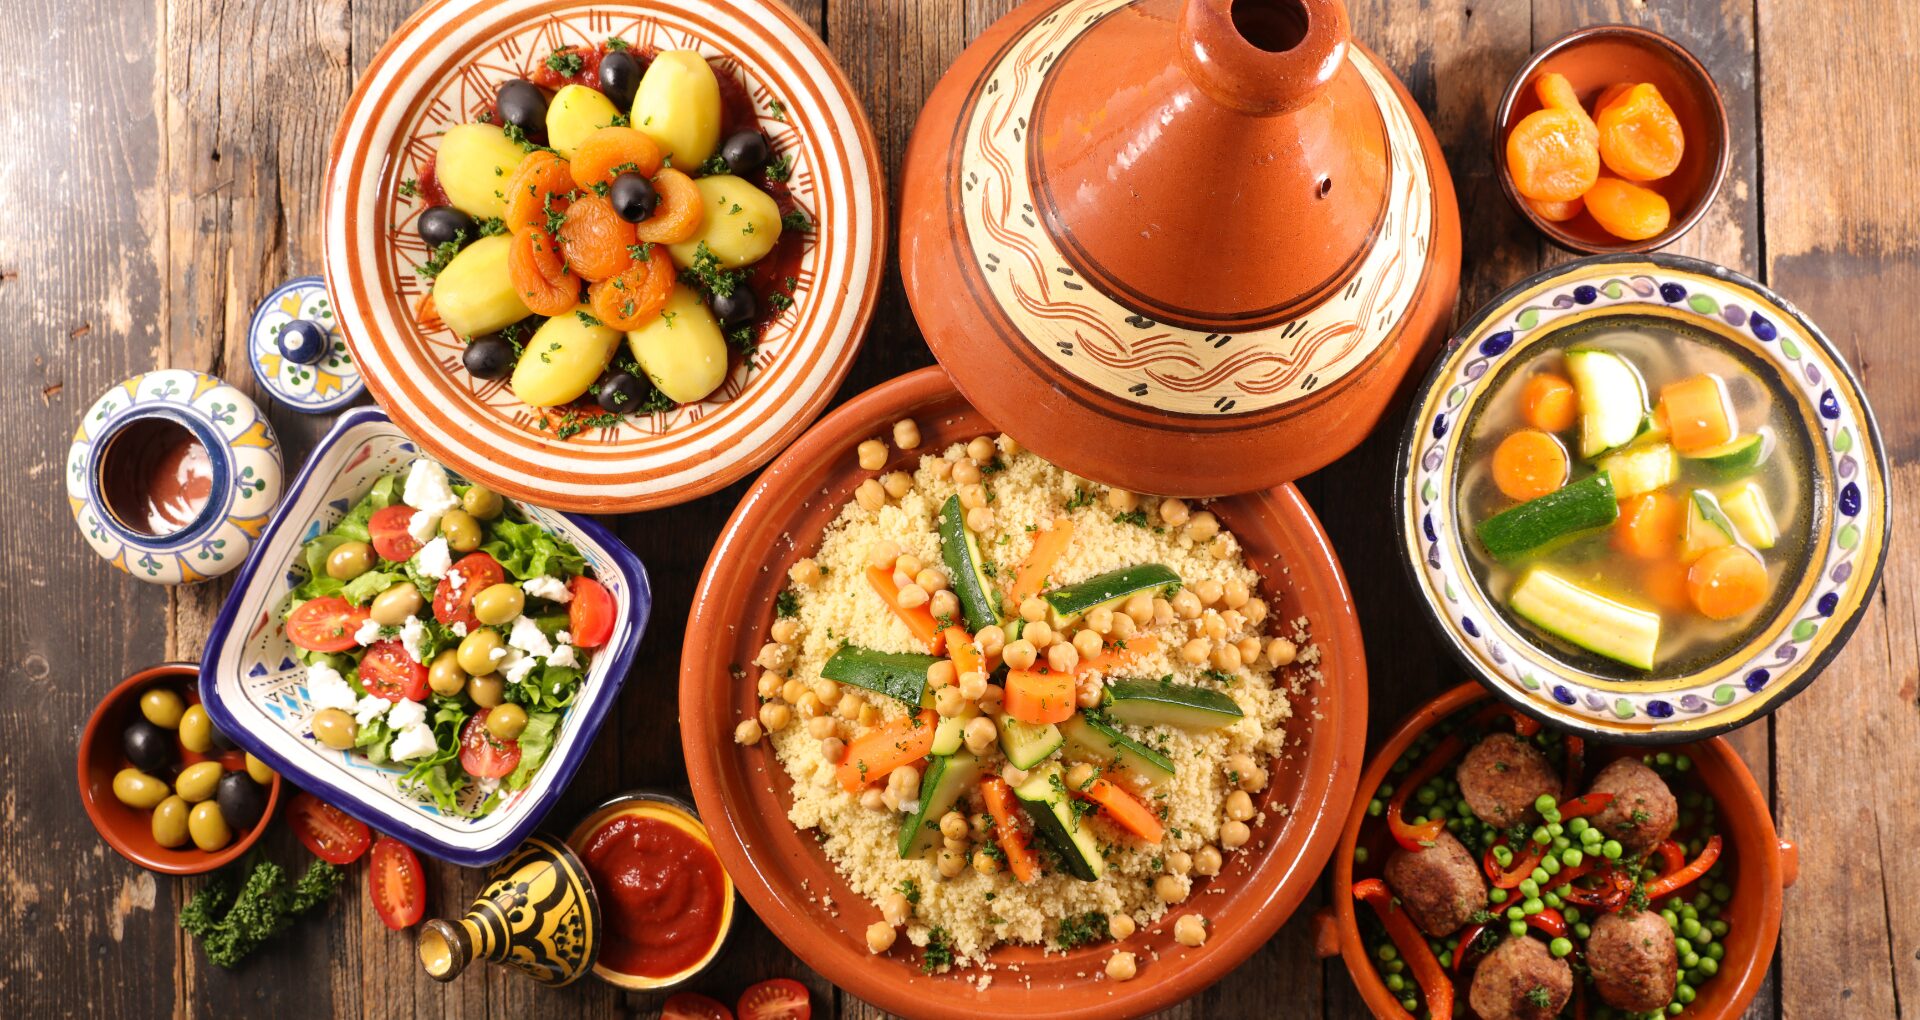 Ferie med mad smag på Marokko